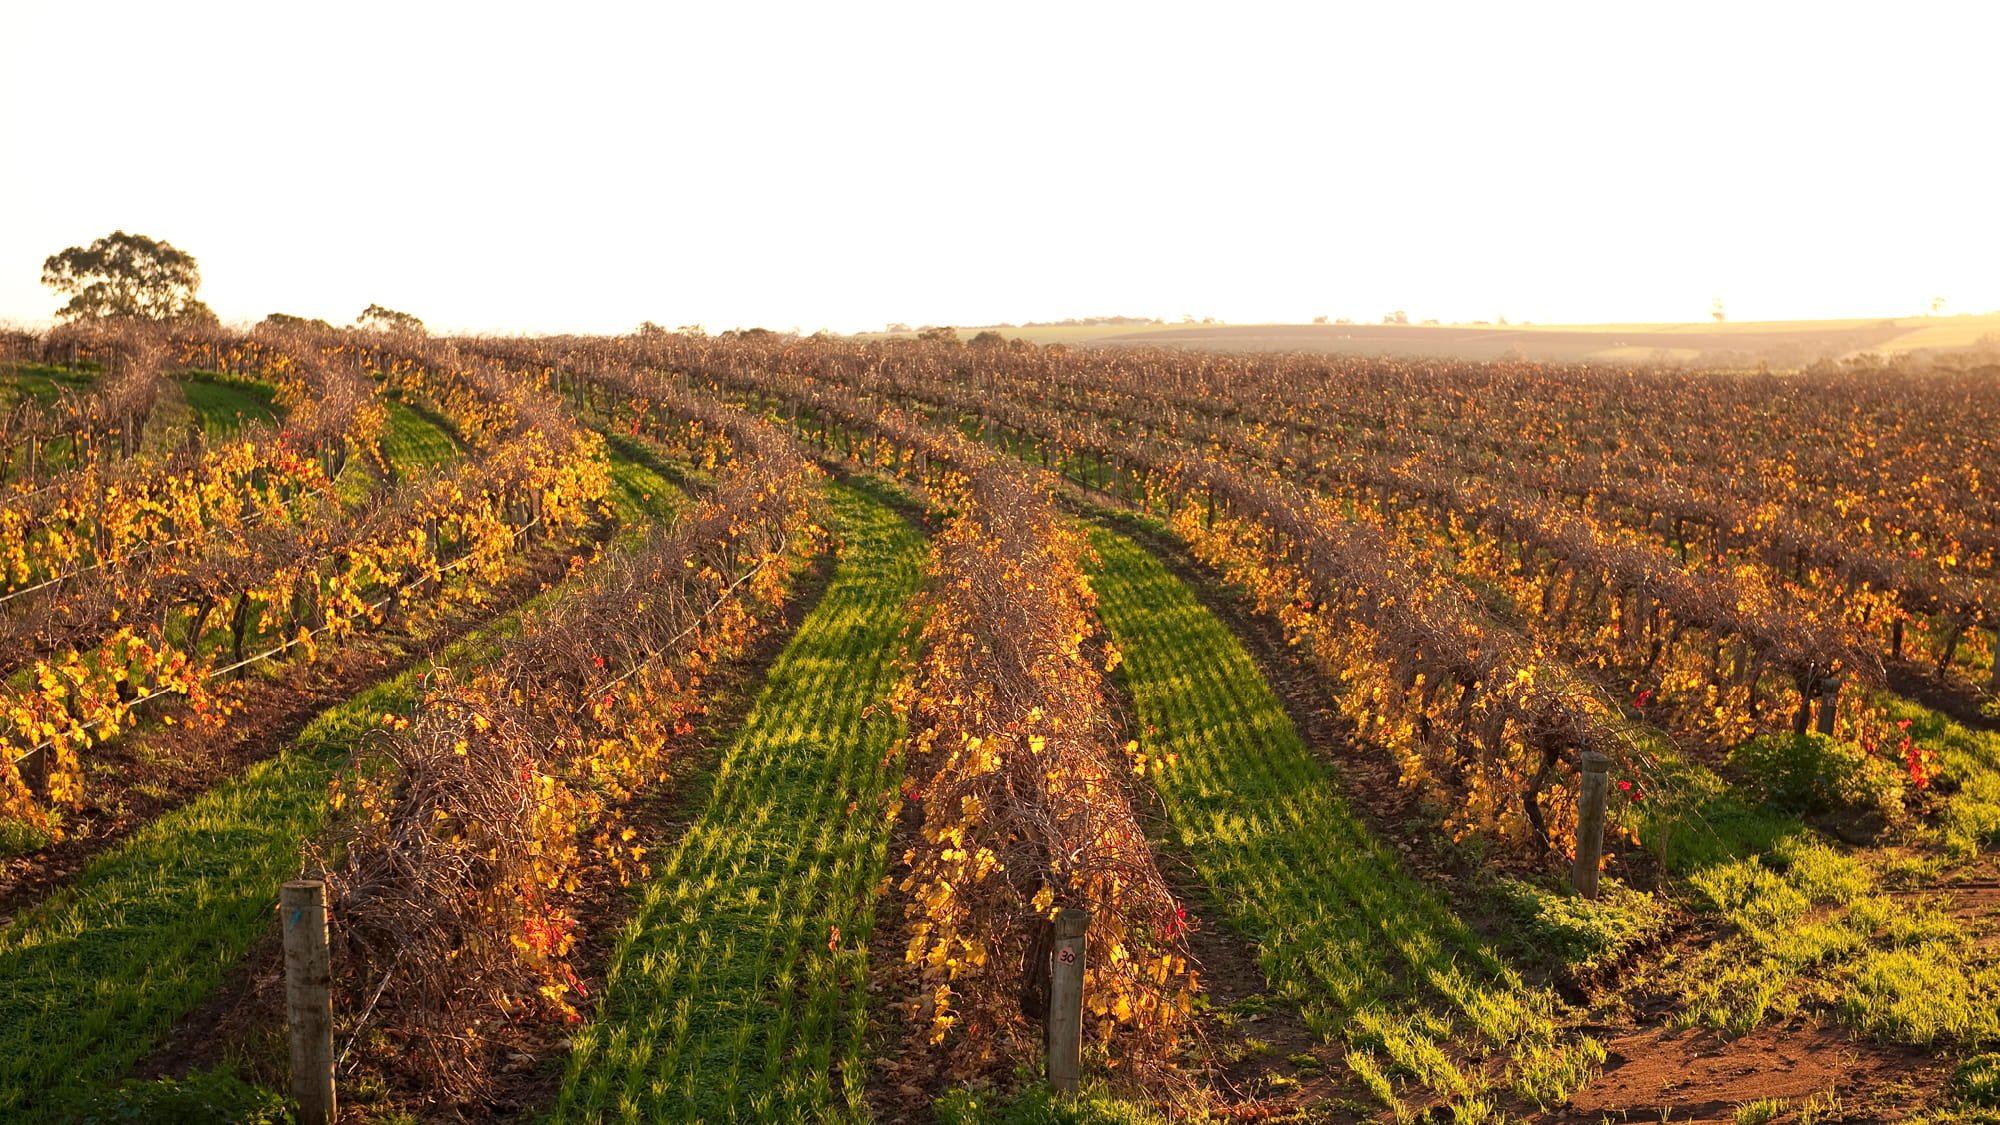 Vineyards in South Australia at dusk